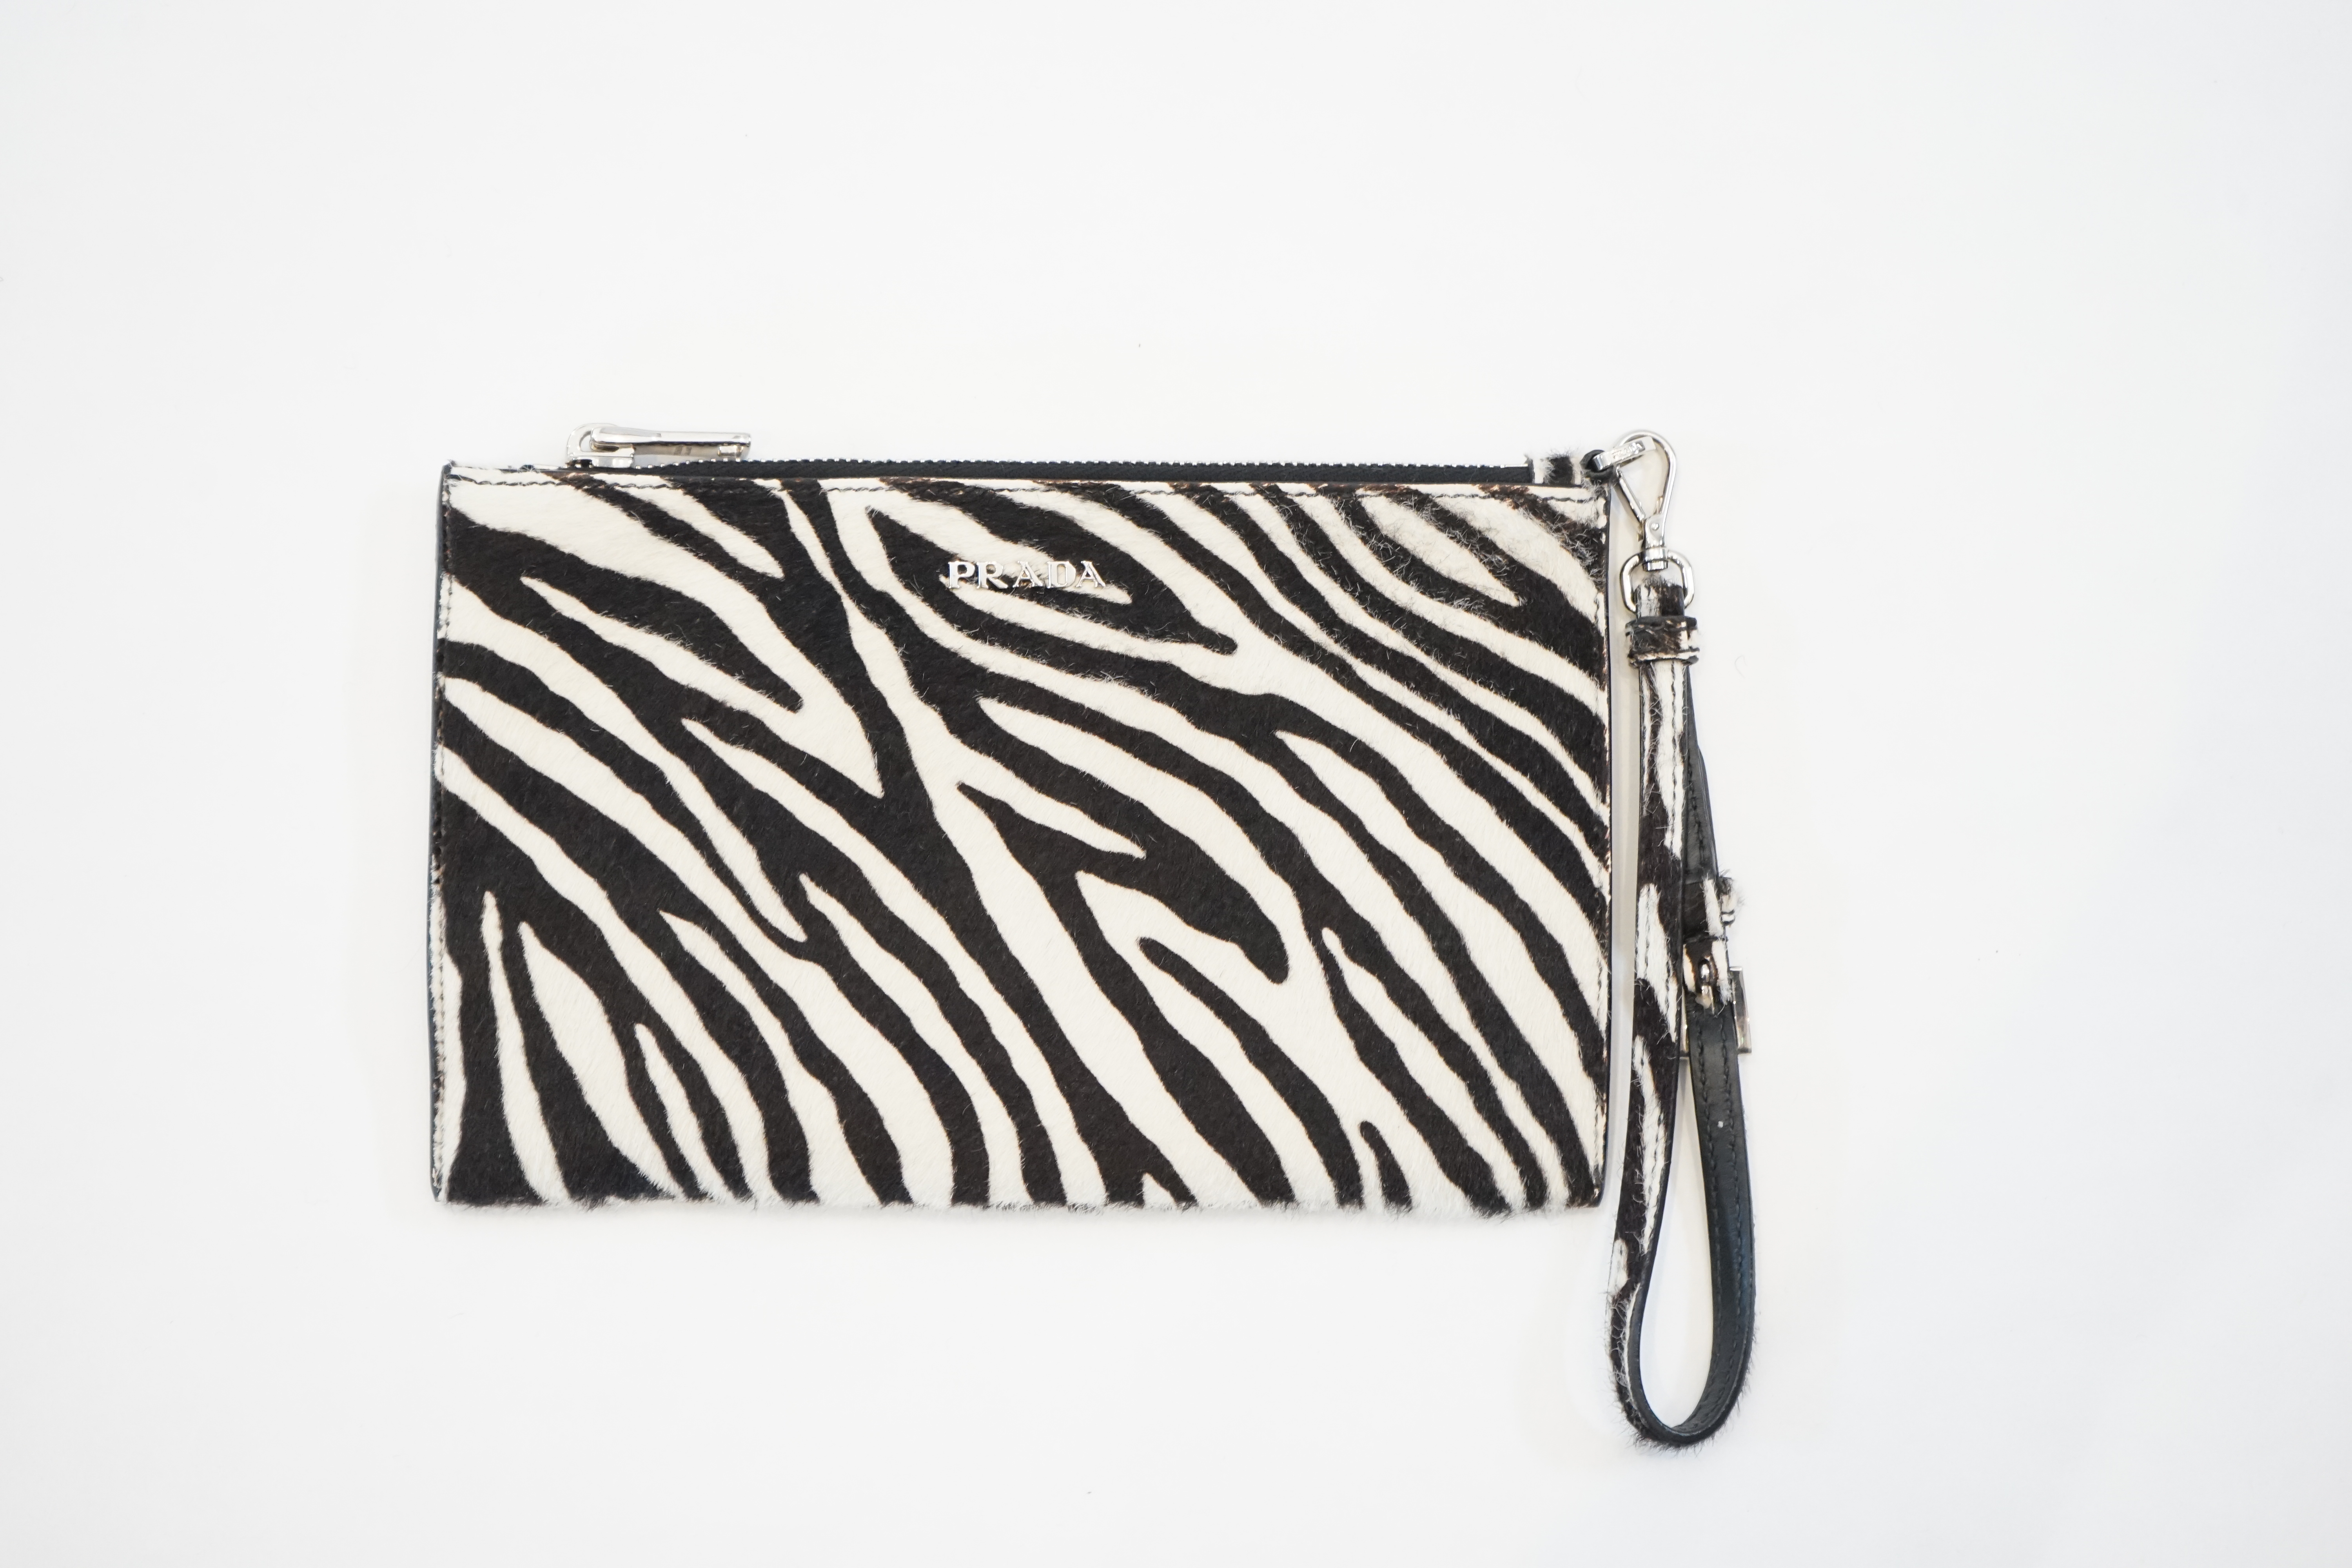 A Prada zebra print pony skin purse bag, width 21cm, height 13cm